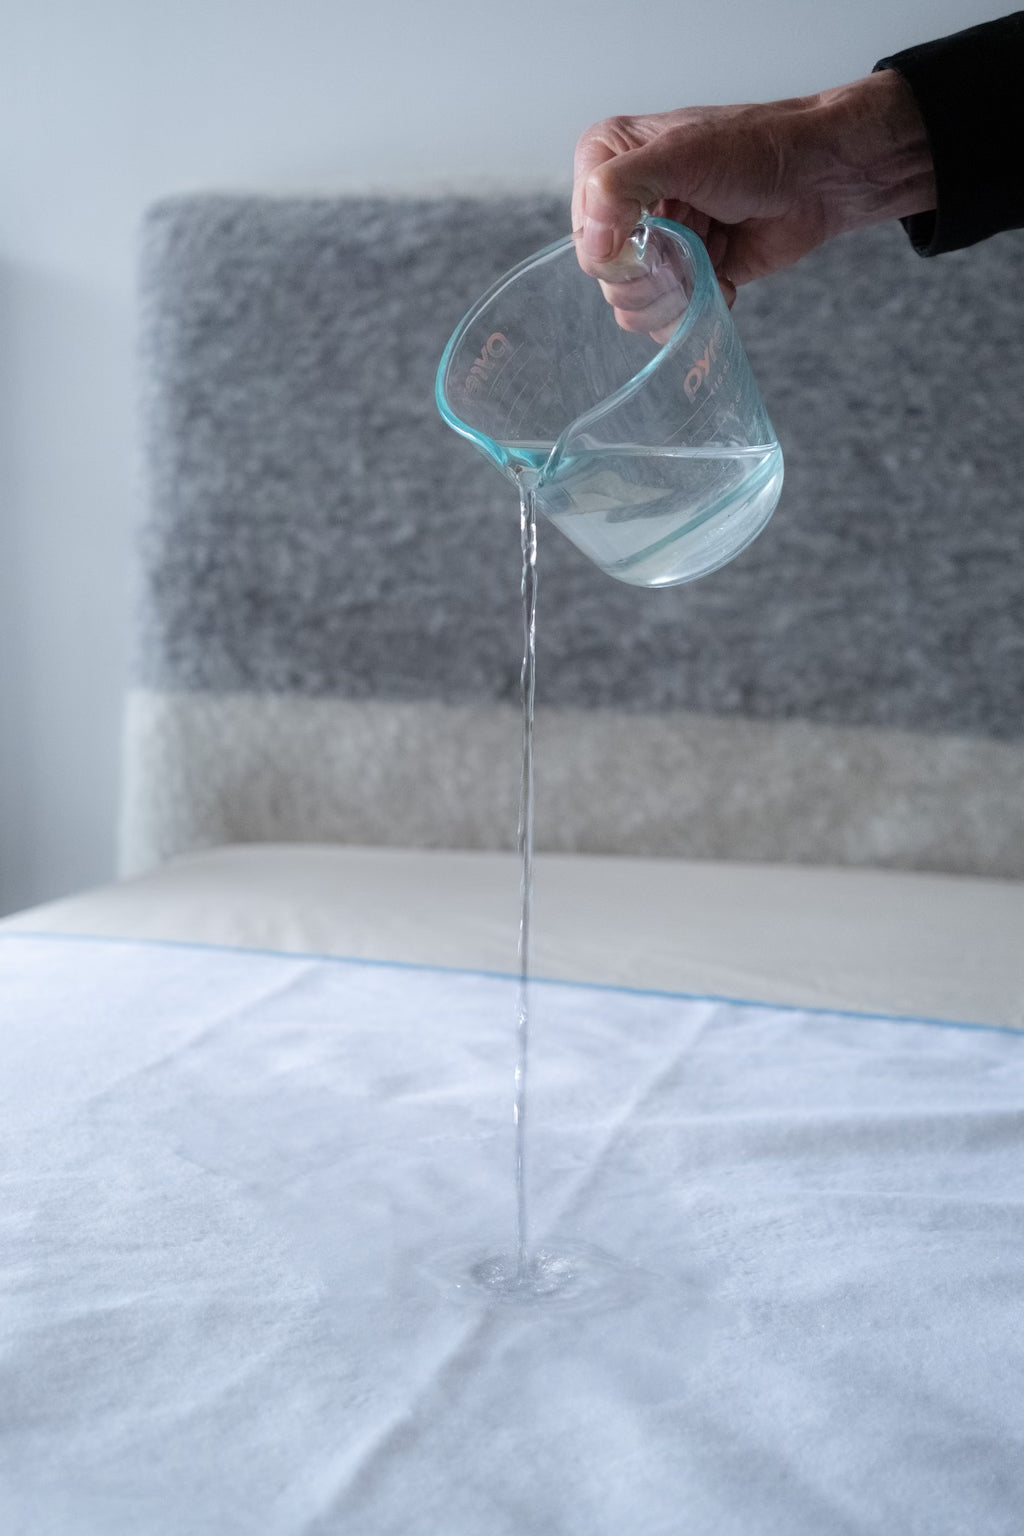 Ultra Absorbent Waterproof Flannelette Over Sheet Protector